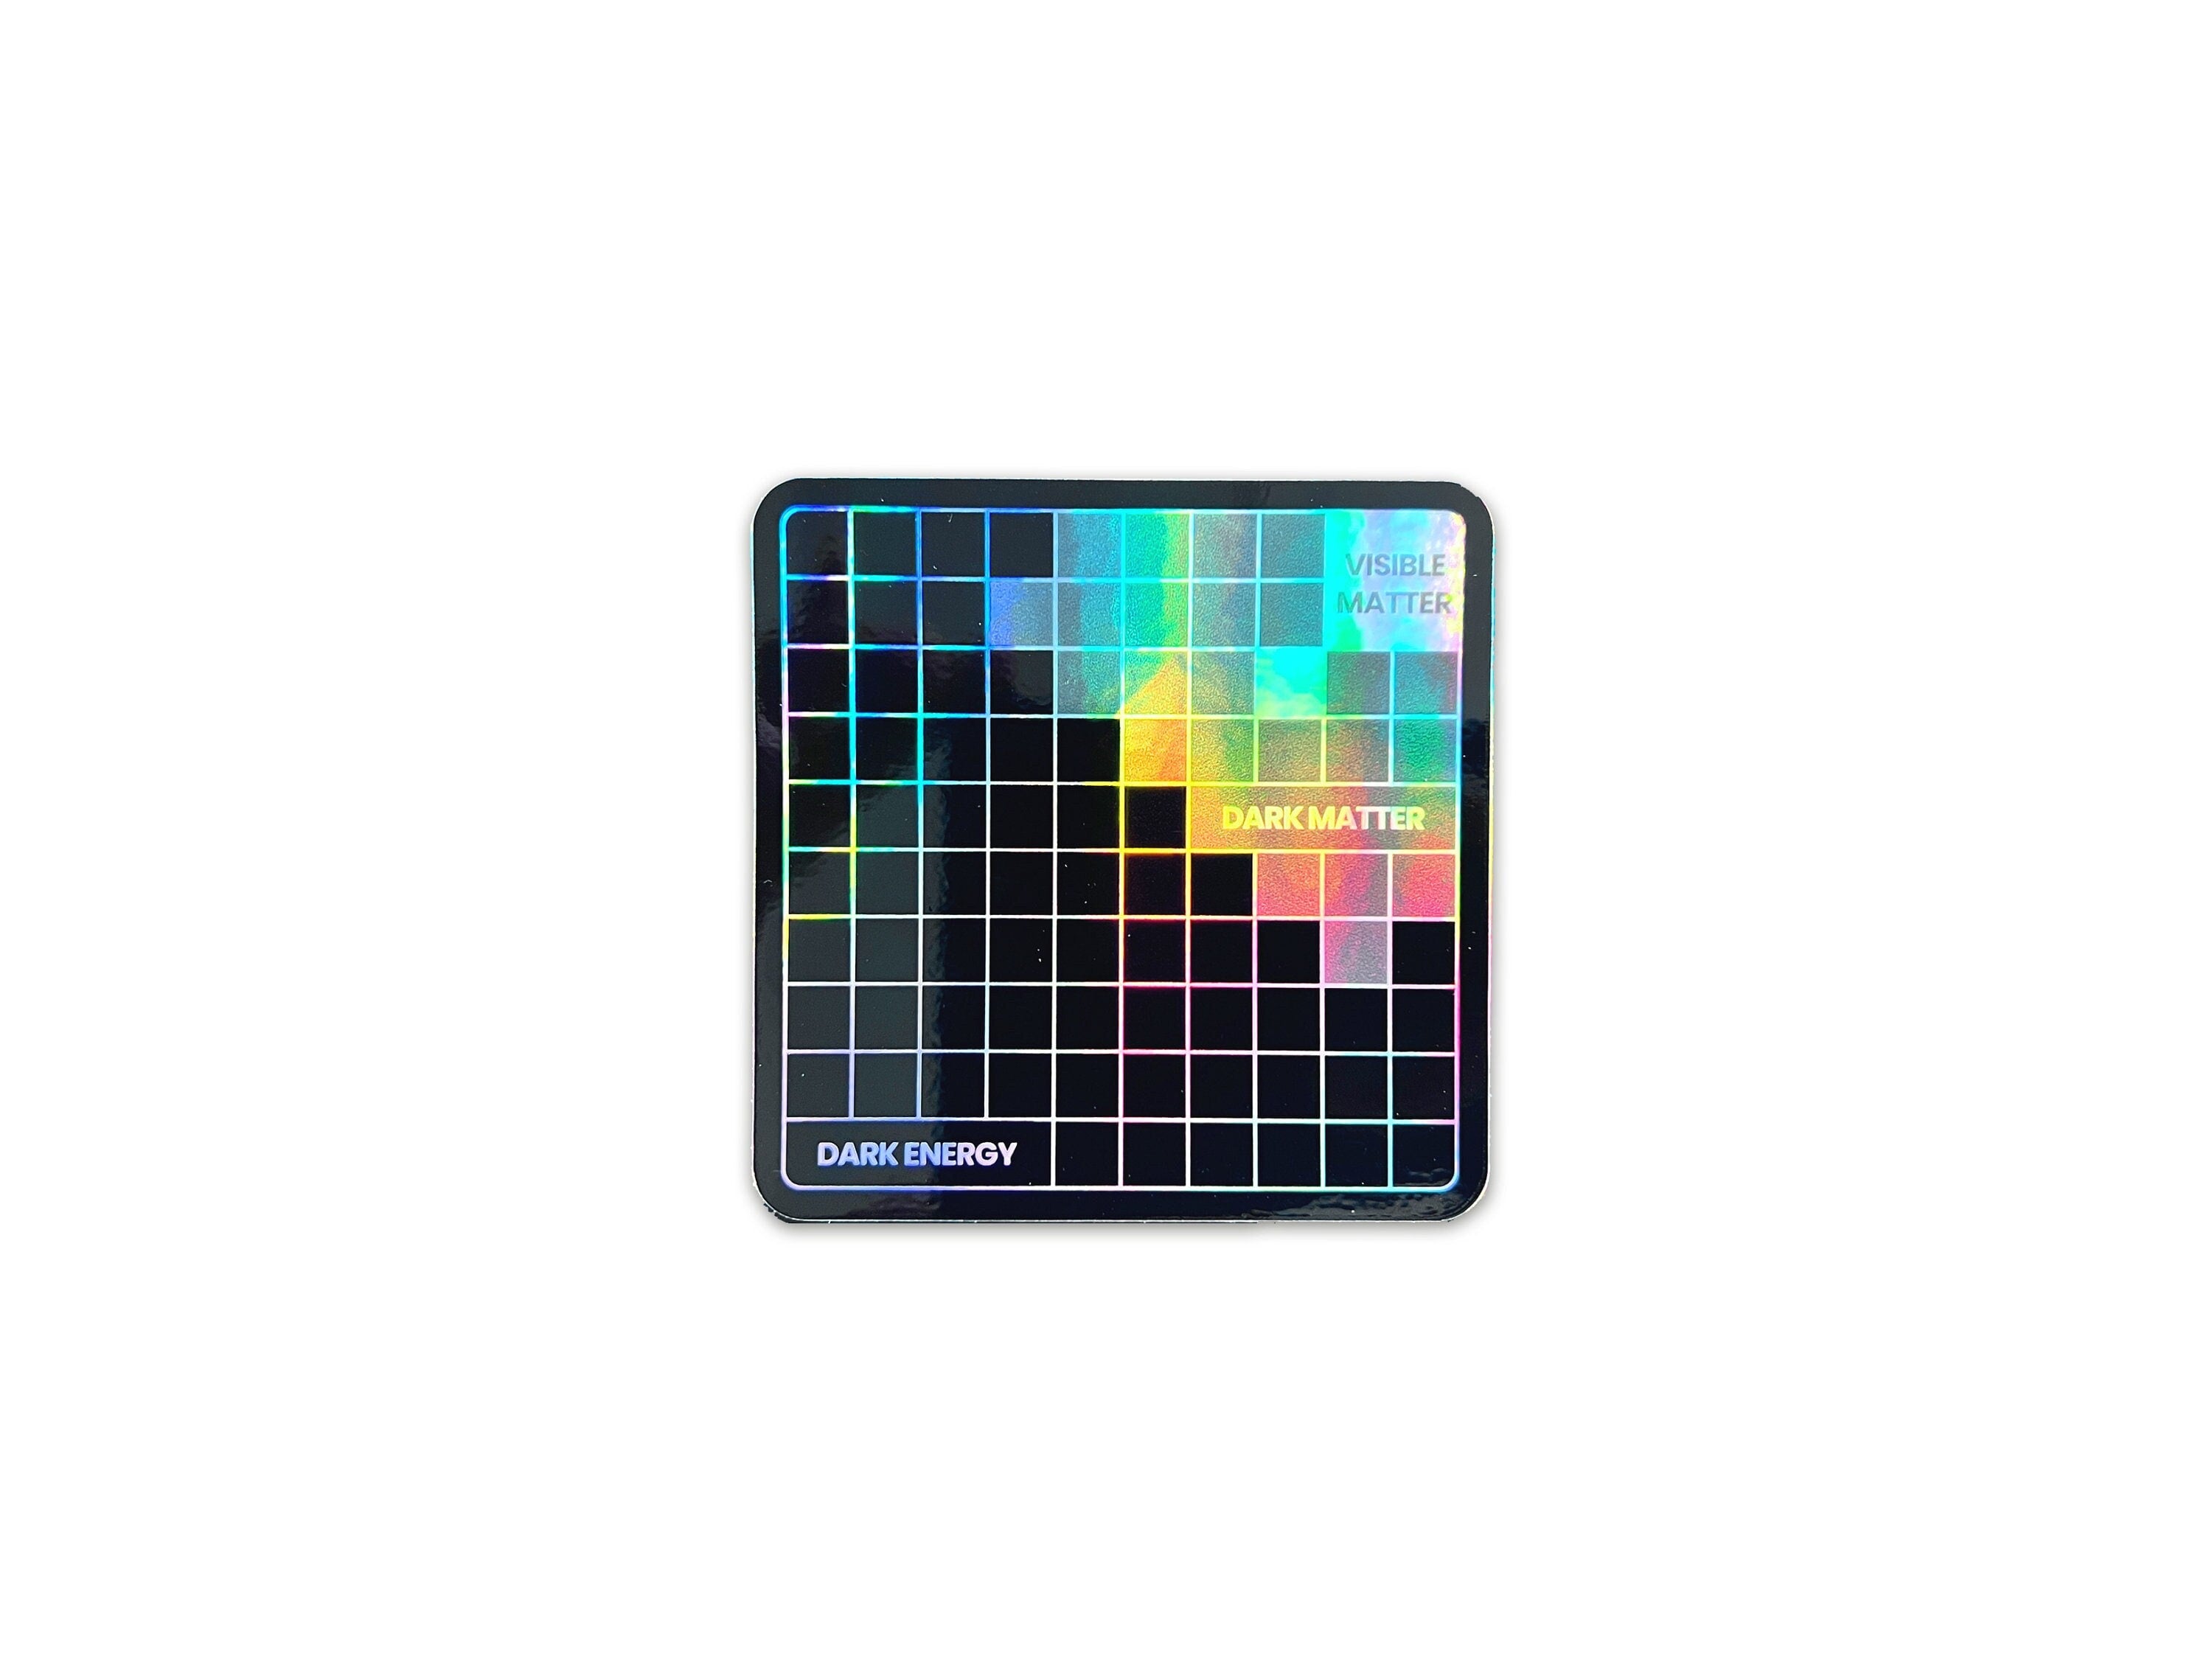 Universe Composition Holographic Vinyl Decal - Sci-fi Cyberpunk / Astropunk Laptop Sticker - Astrophysics Bumper Sticker